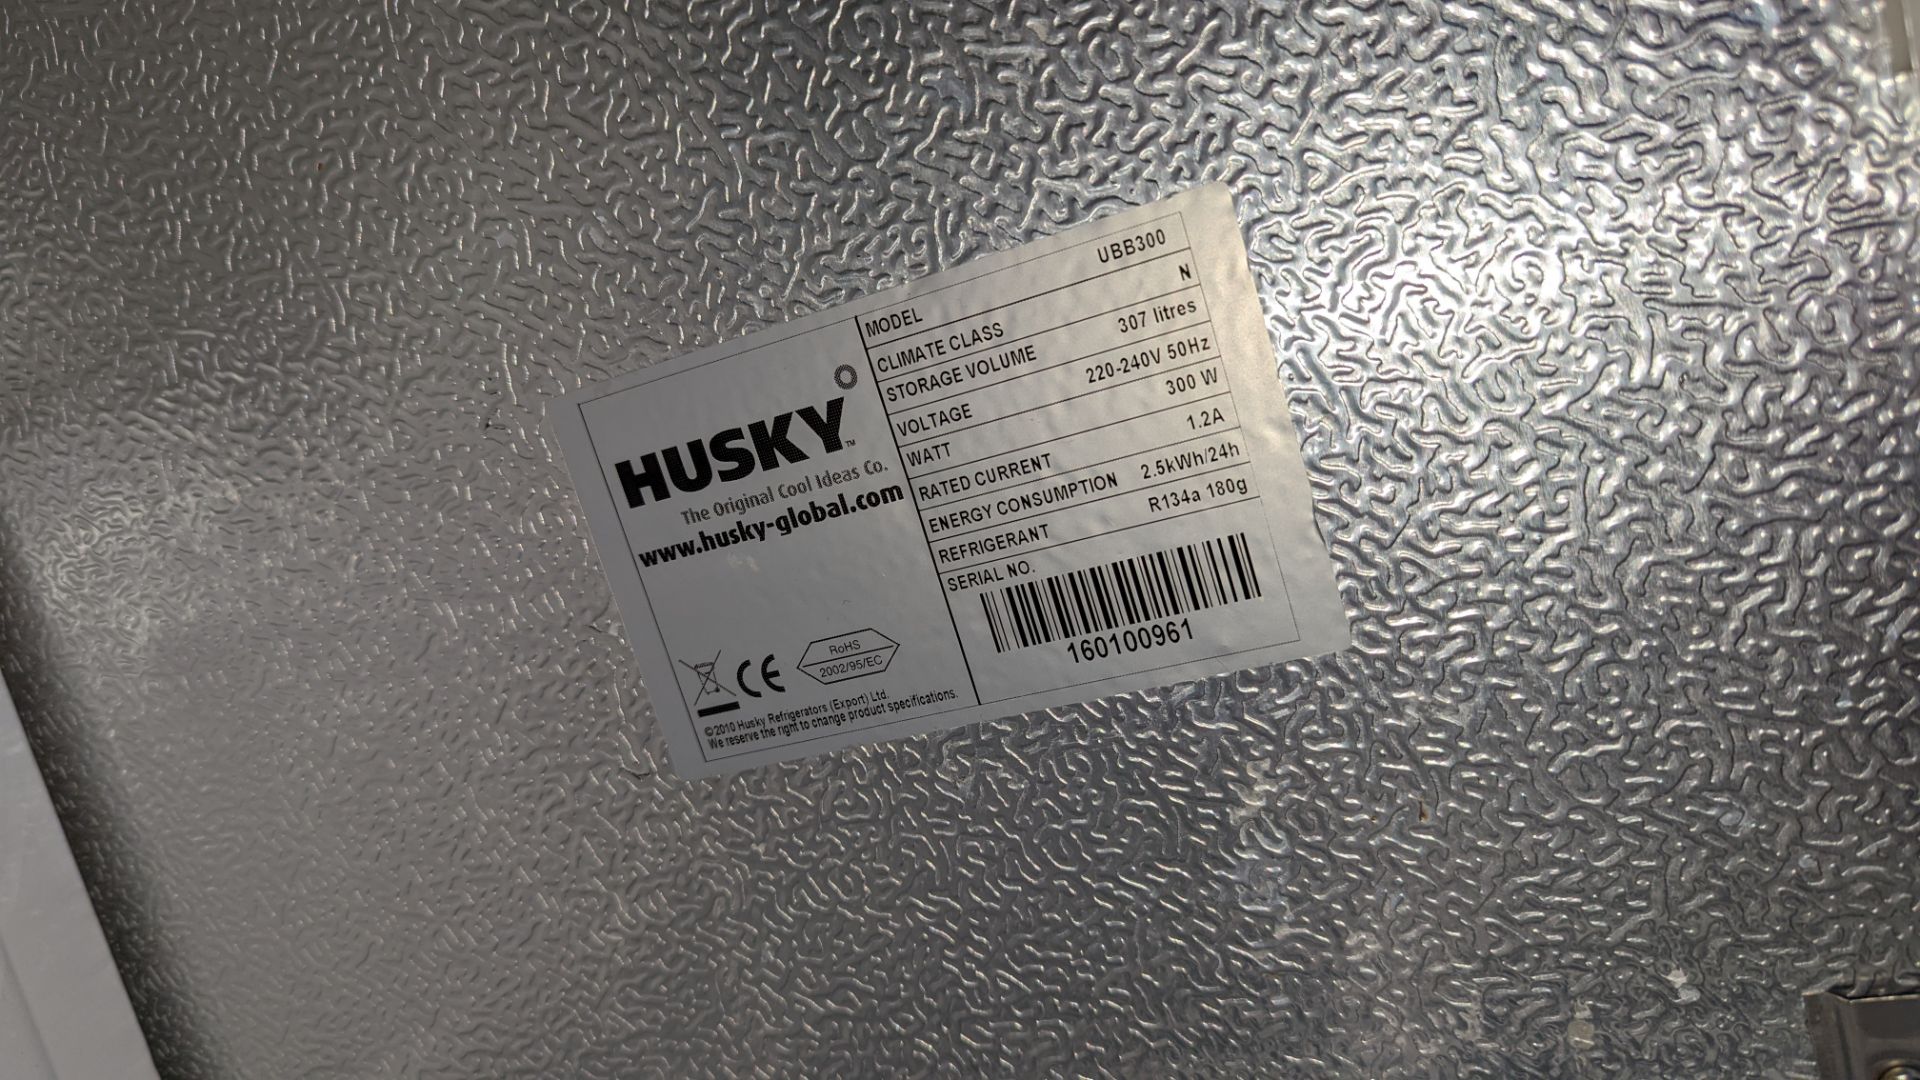 Husky black tall clear door display fridge - Image 4 of 4